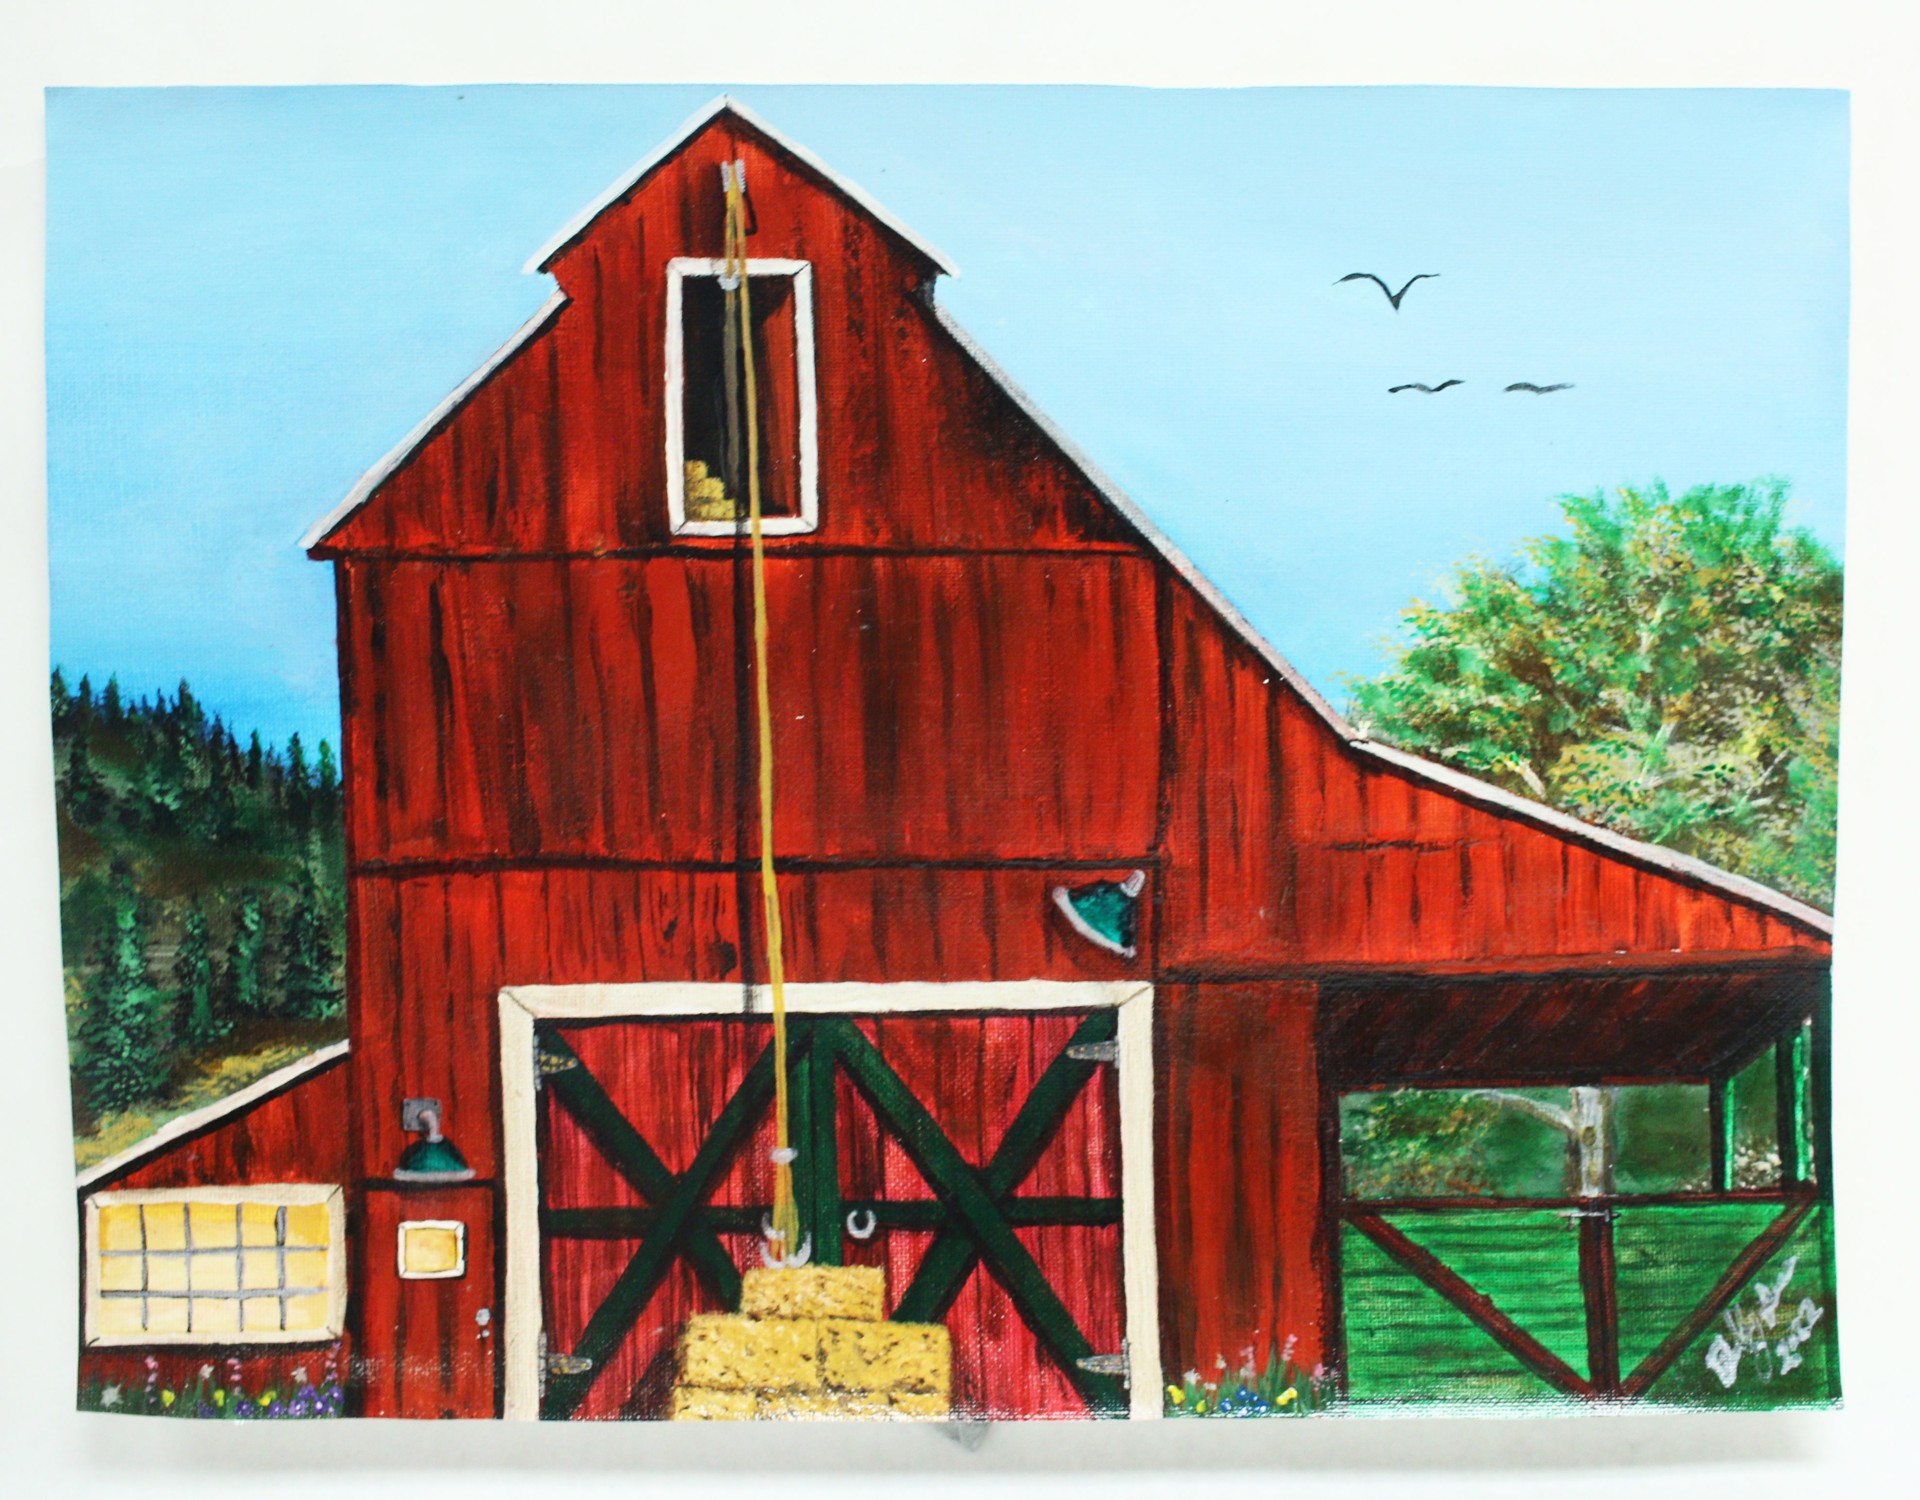 The Barn by B. Lucero